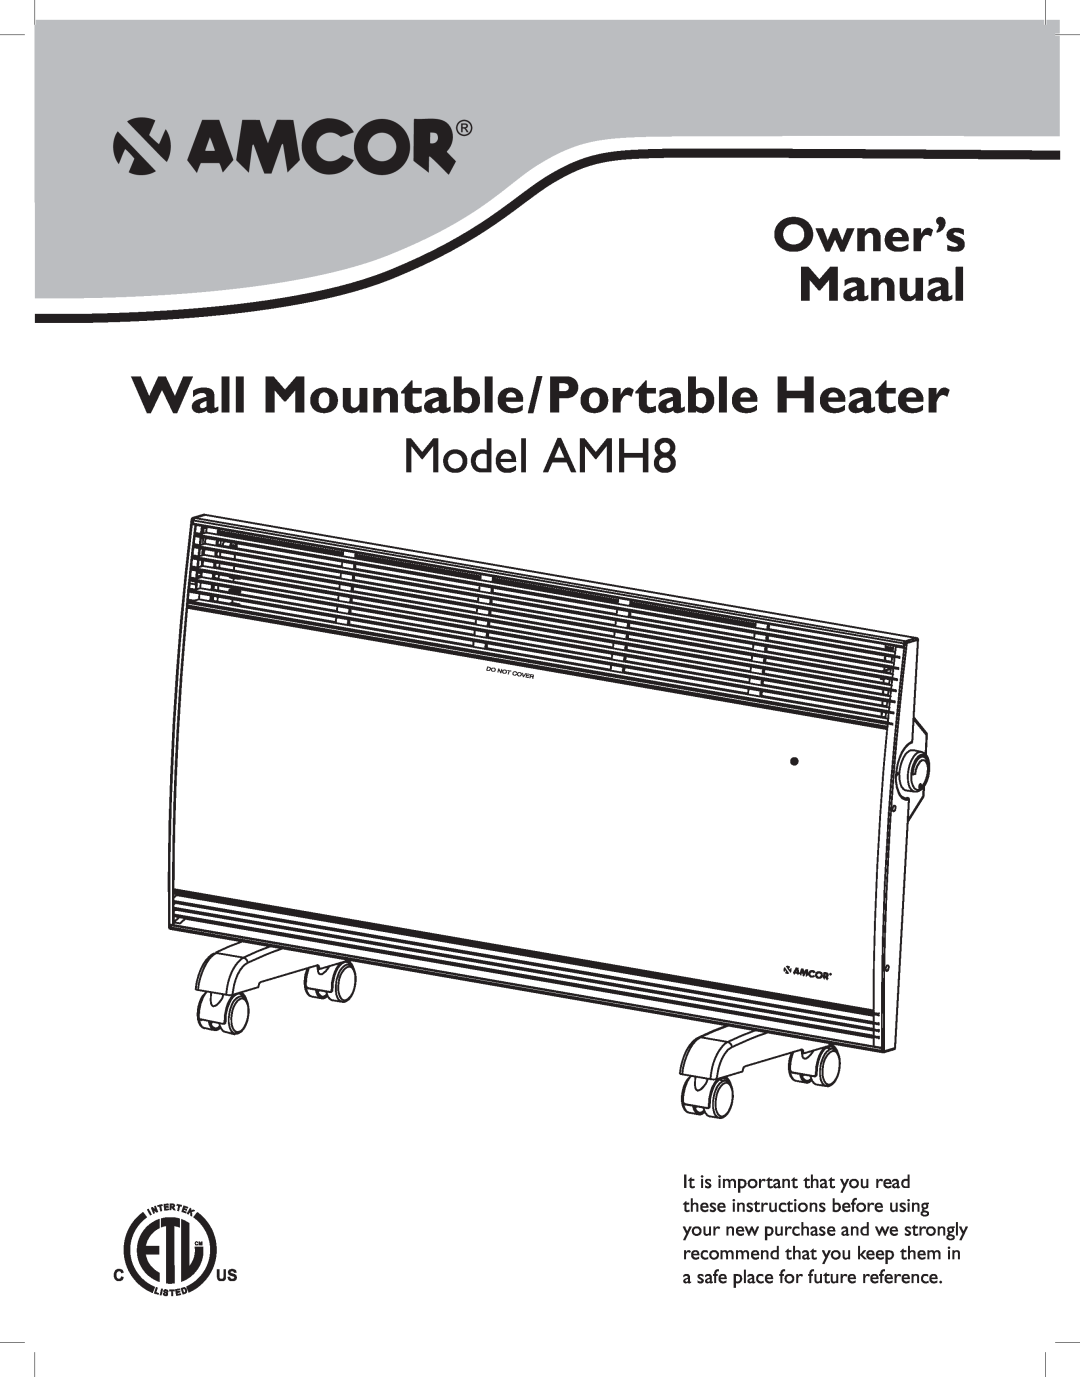 Amcor owner manual Wall Mountable/Portable Heater, Model AMH8 